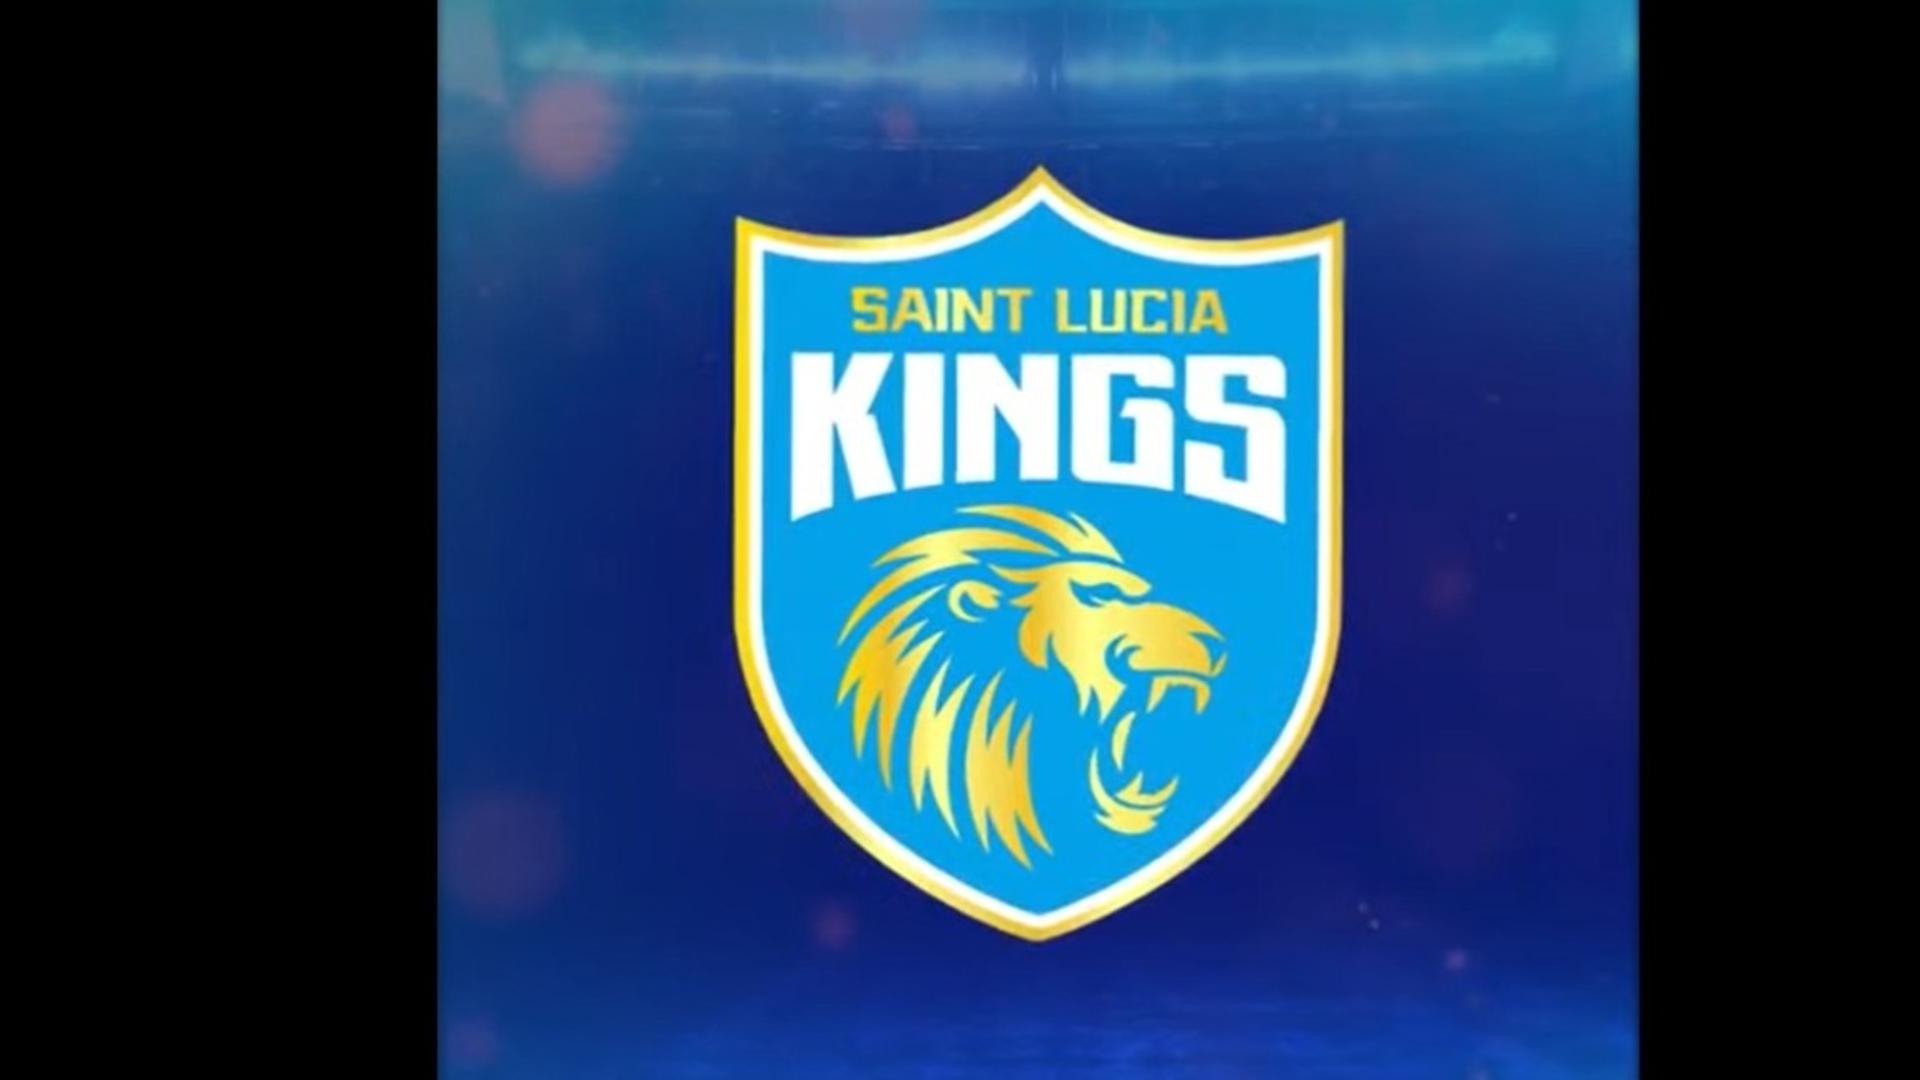 Saint Lucia Kings logo reveal